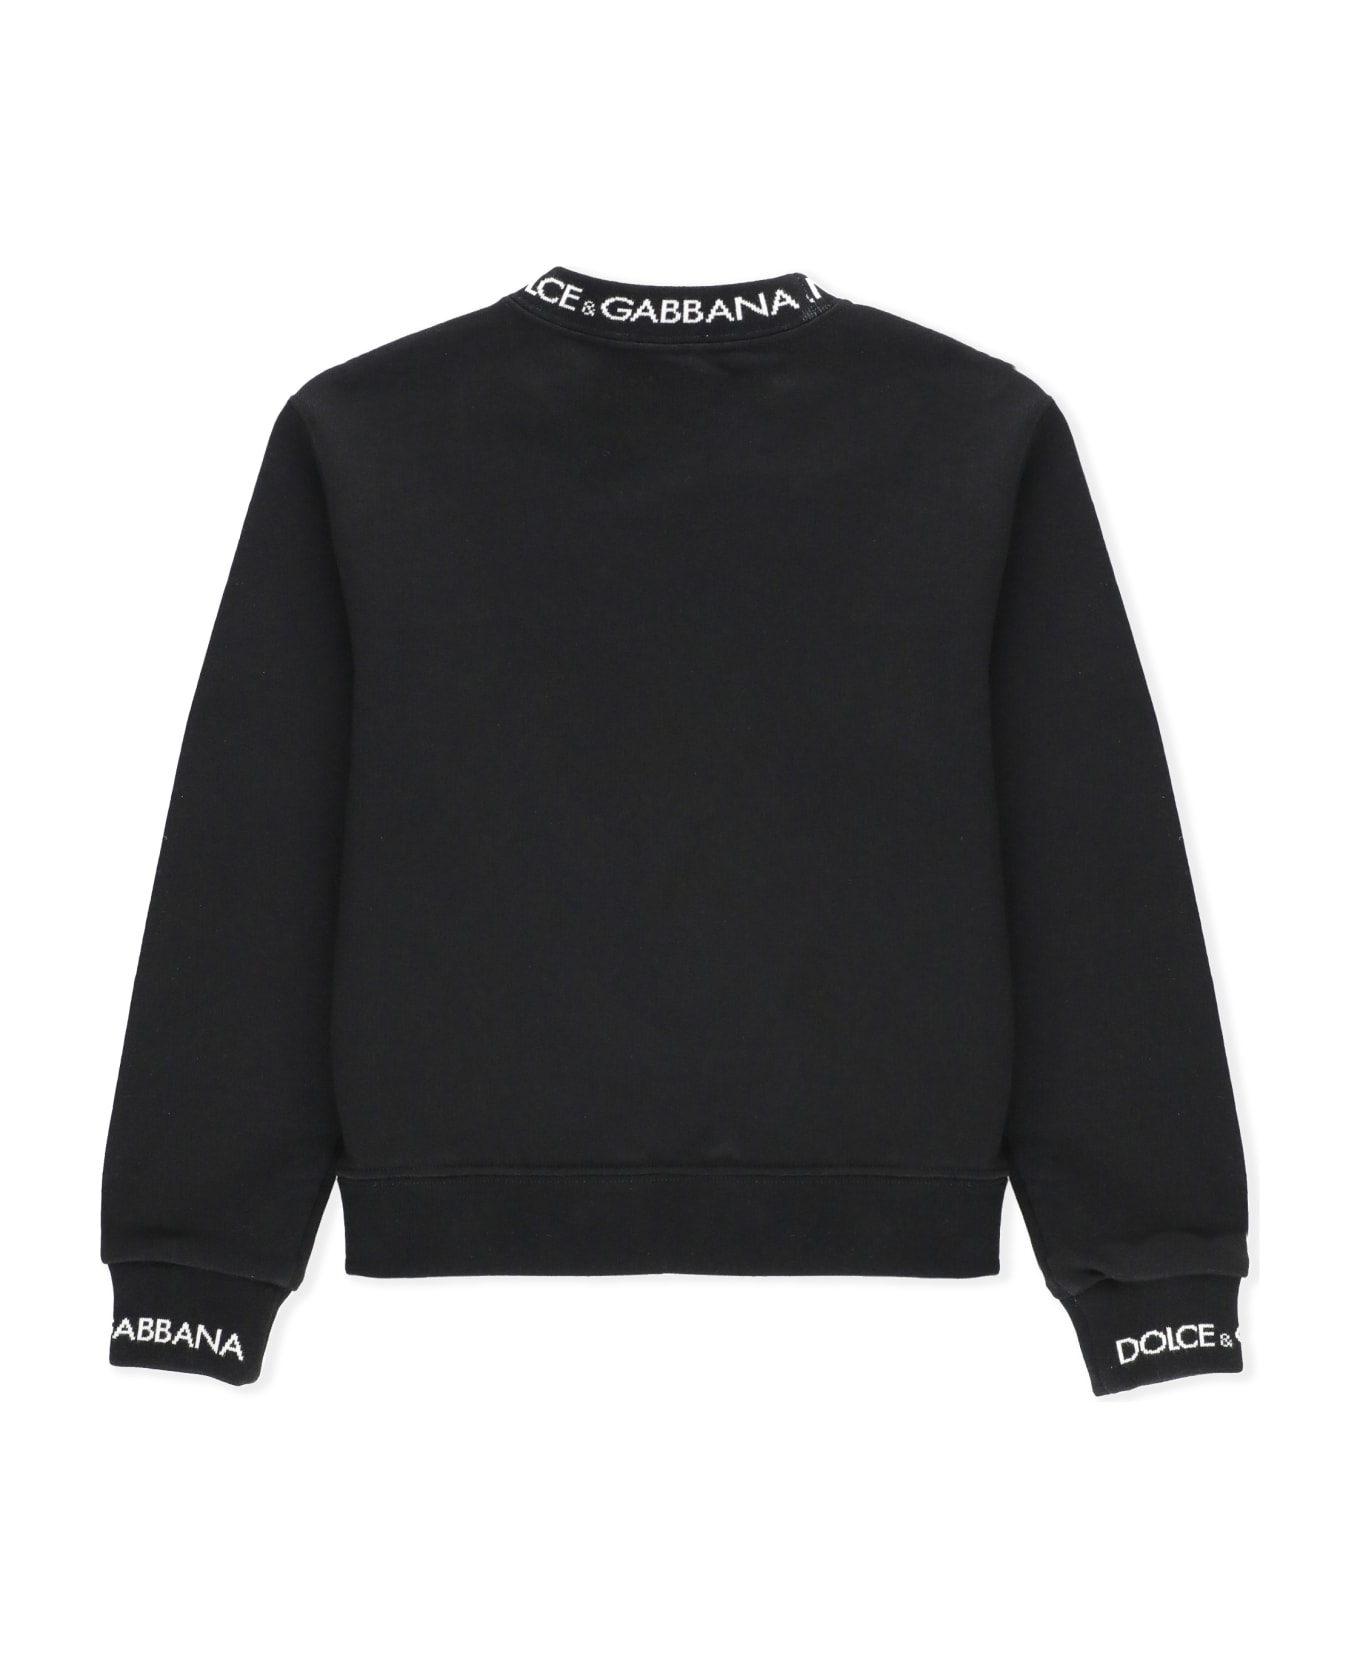 Dolce & Gabbana Cotton Sweatshirt - Black